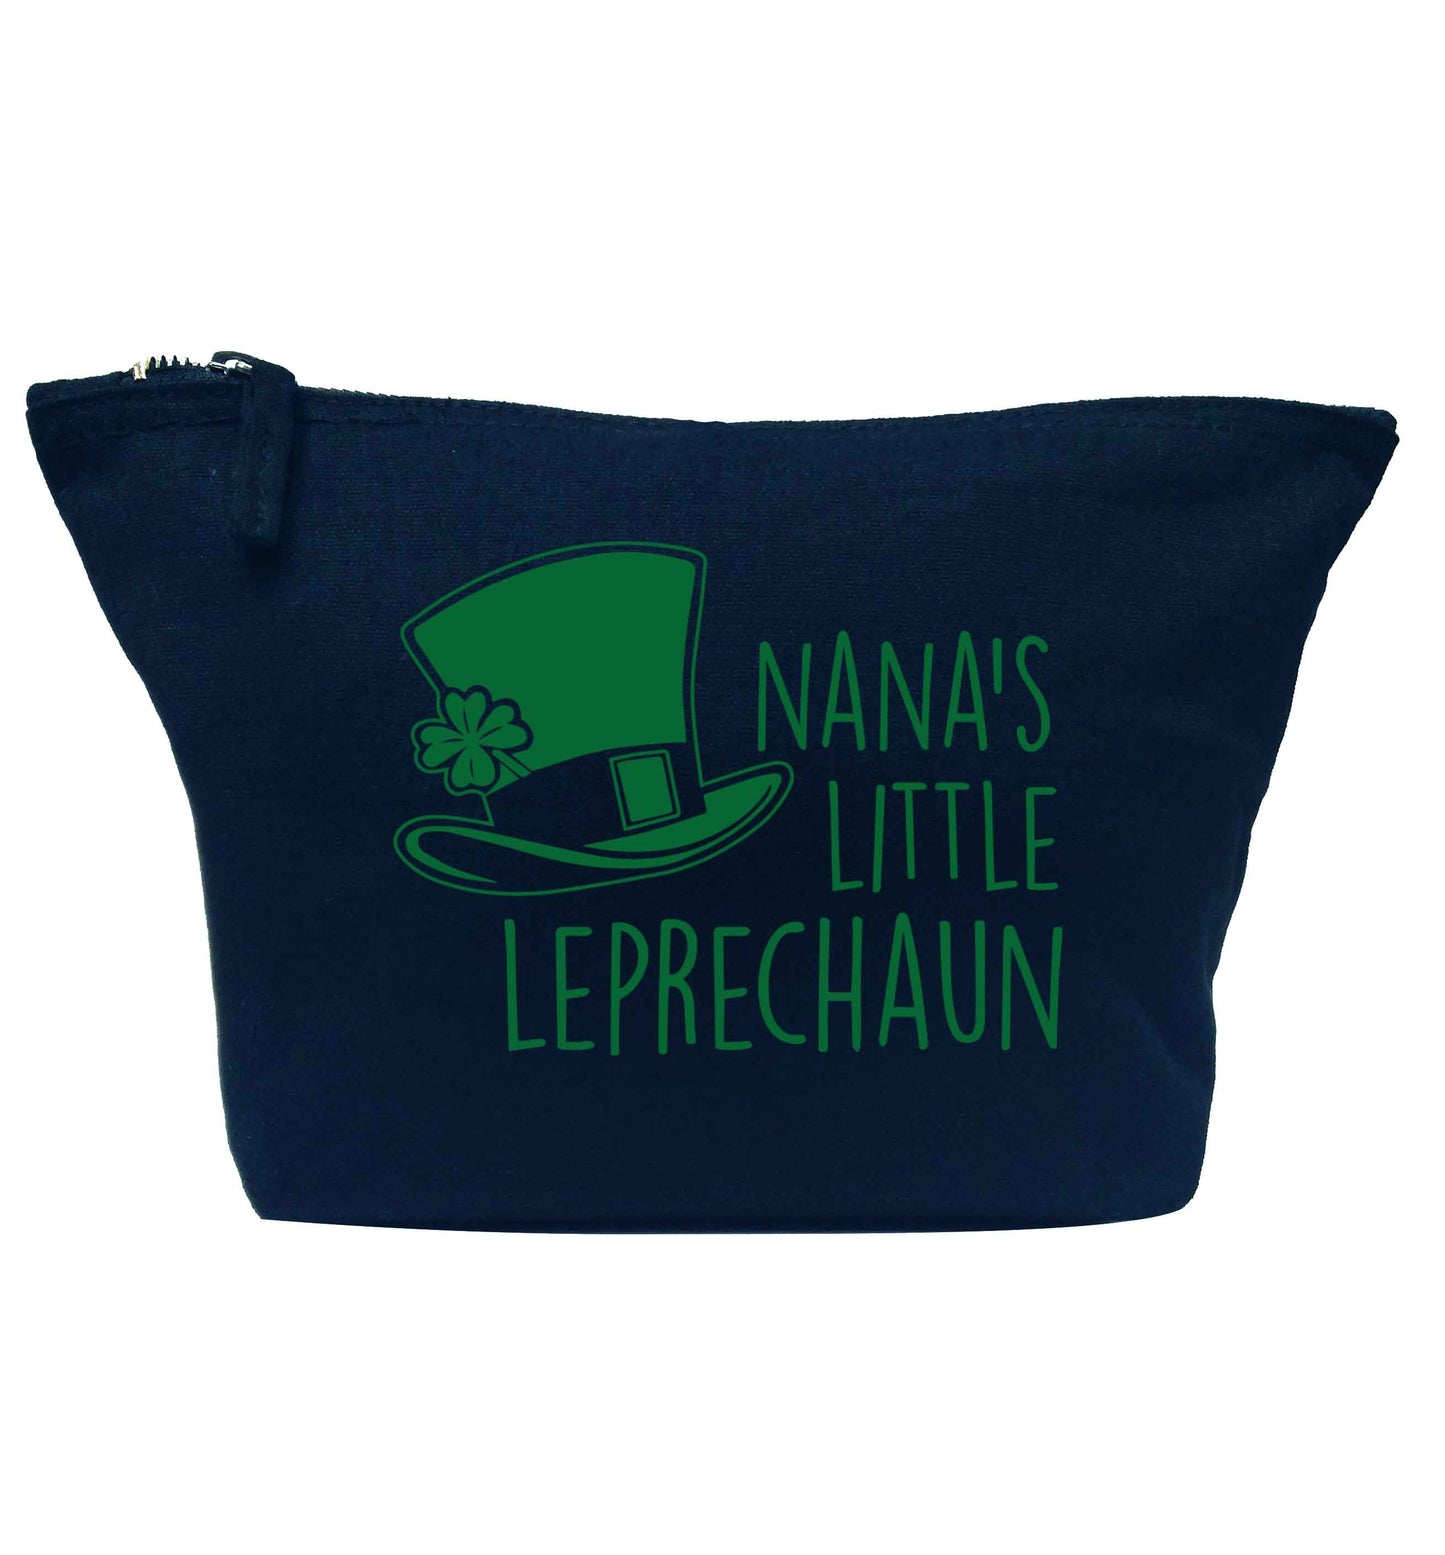 Nana's little leprechaun navy makeup bag